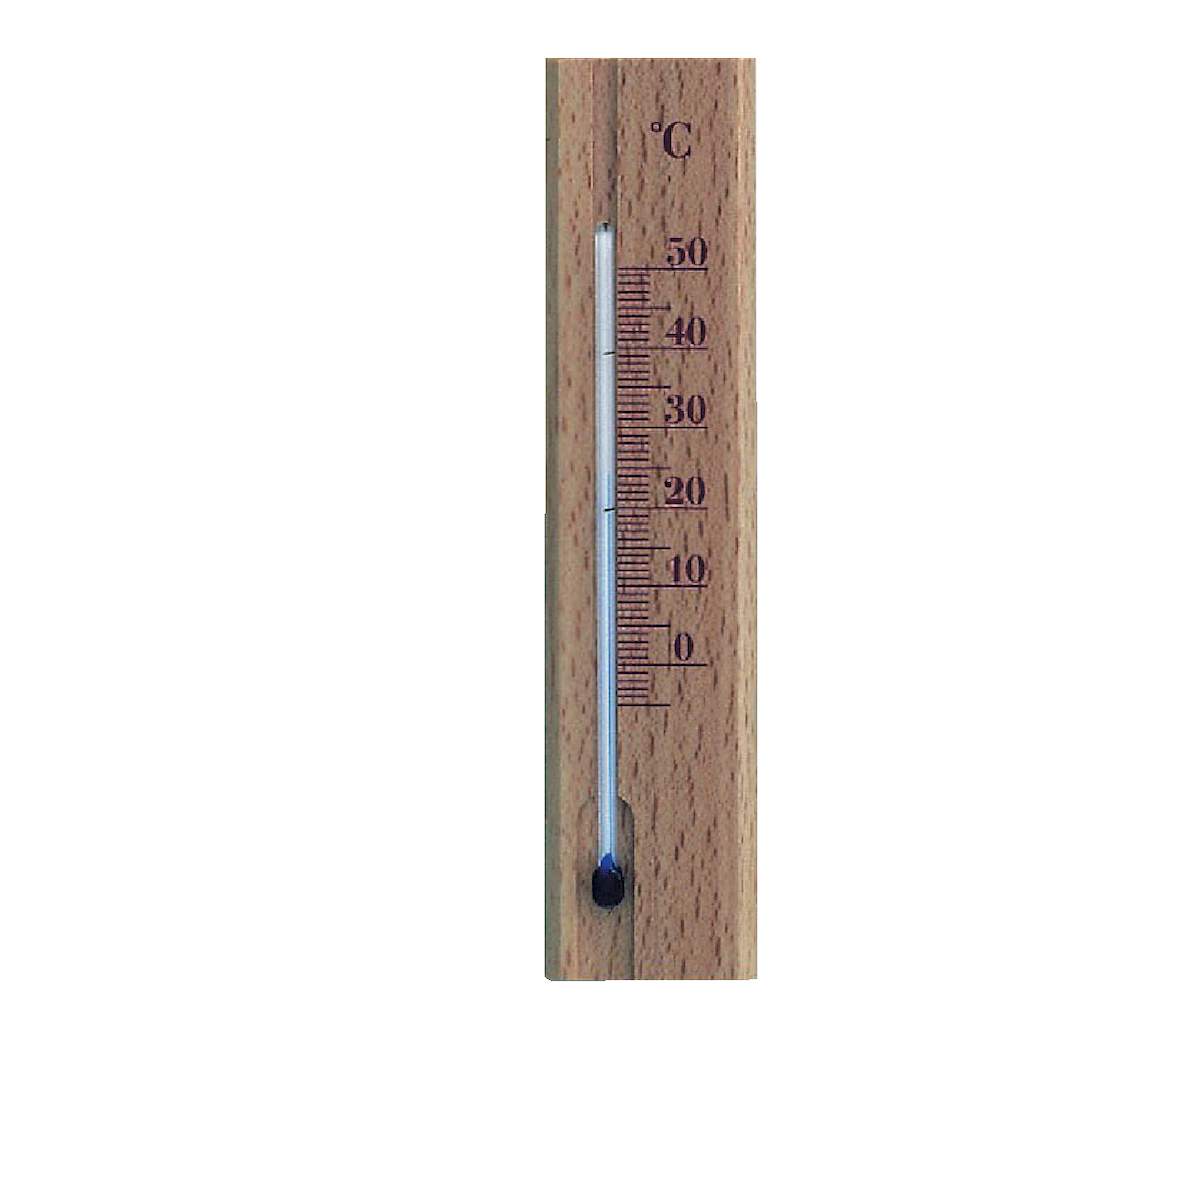 1070887 - Zimmerthermometer Buche 150mm SB